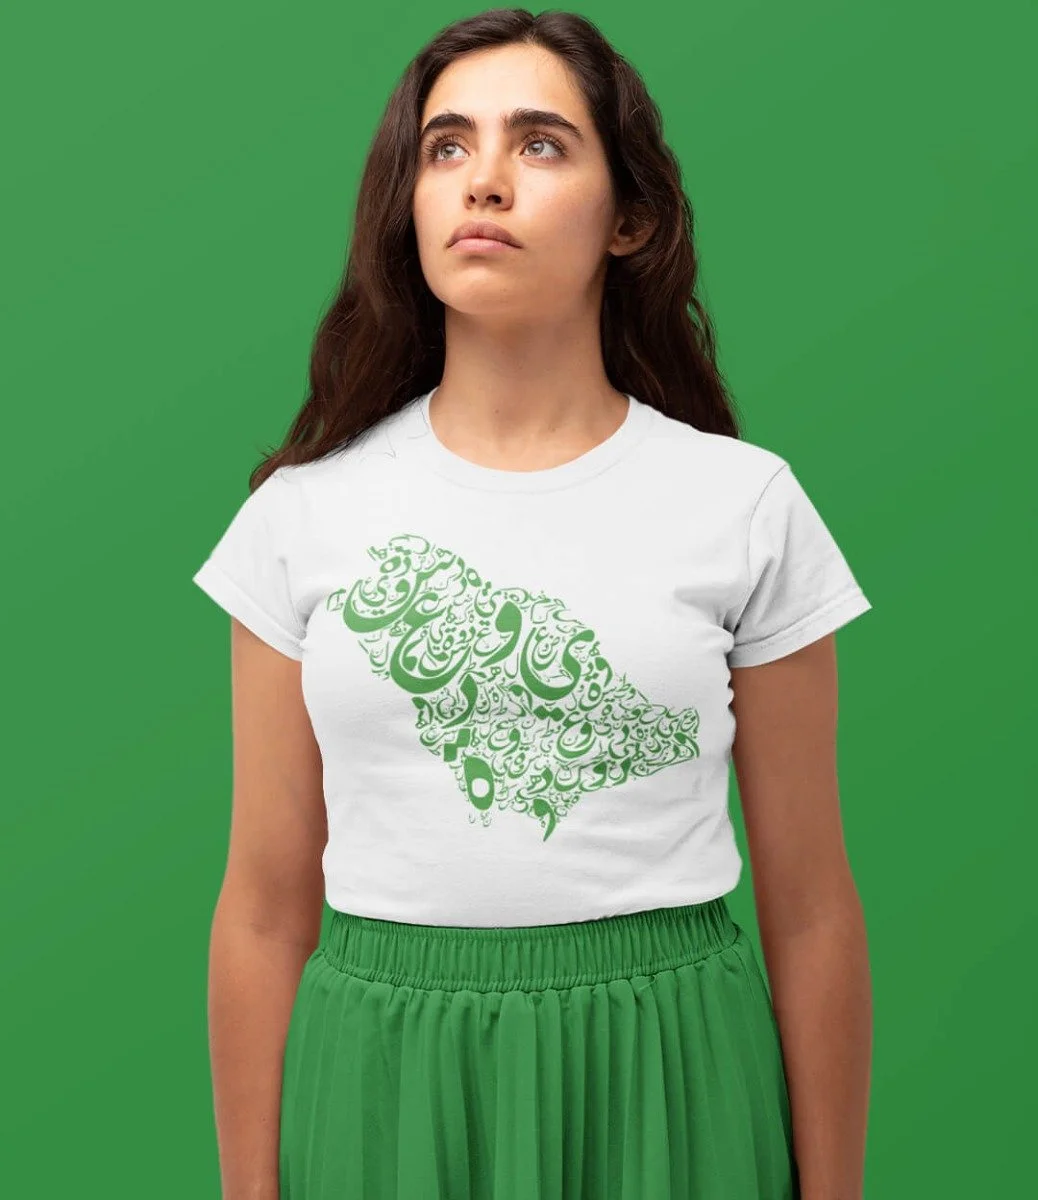 Saudi National Day T-shirt With Arabic Caligraphy